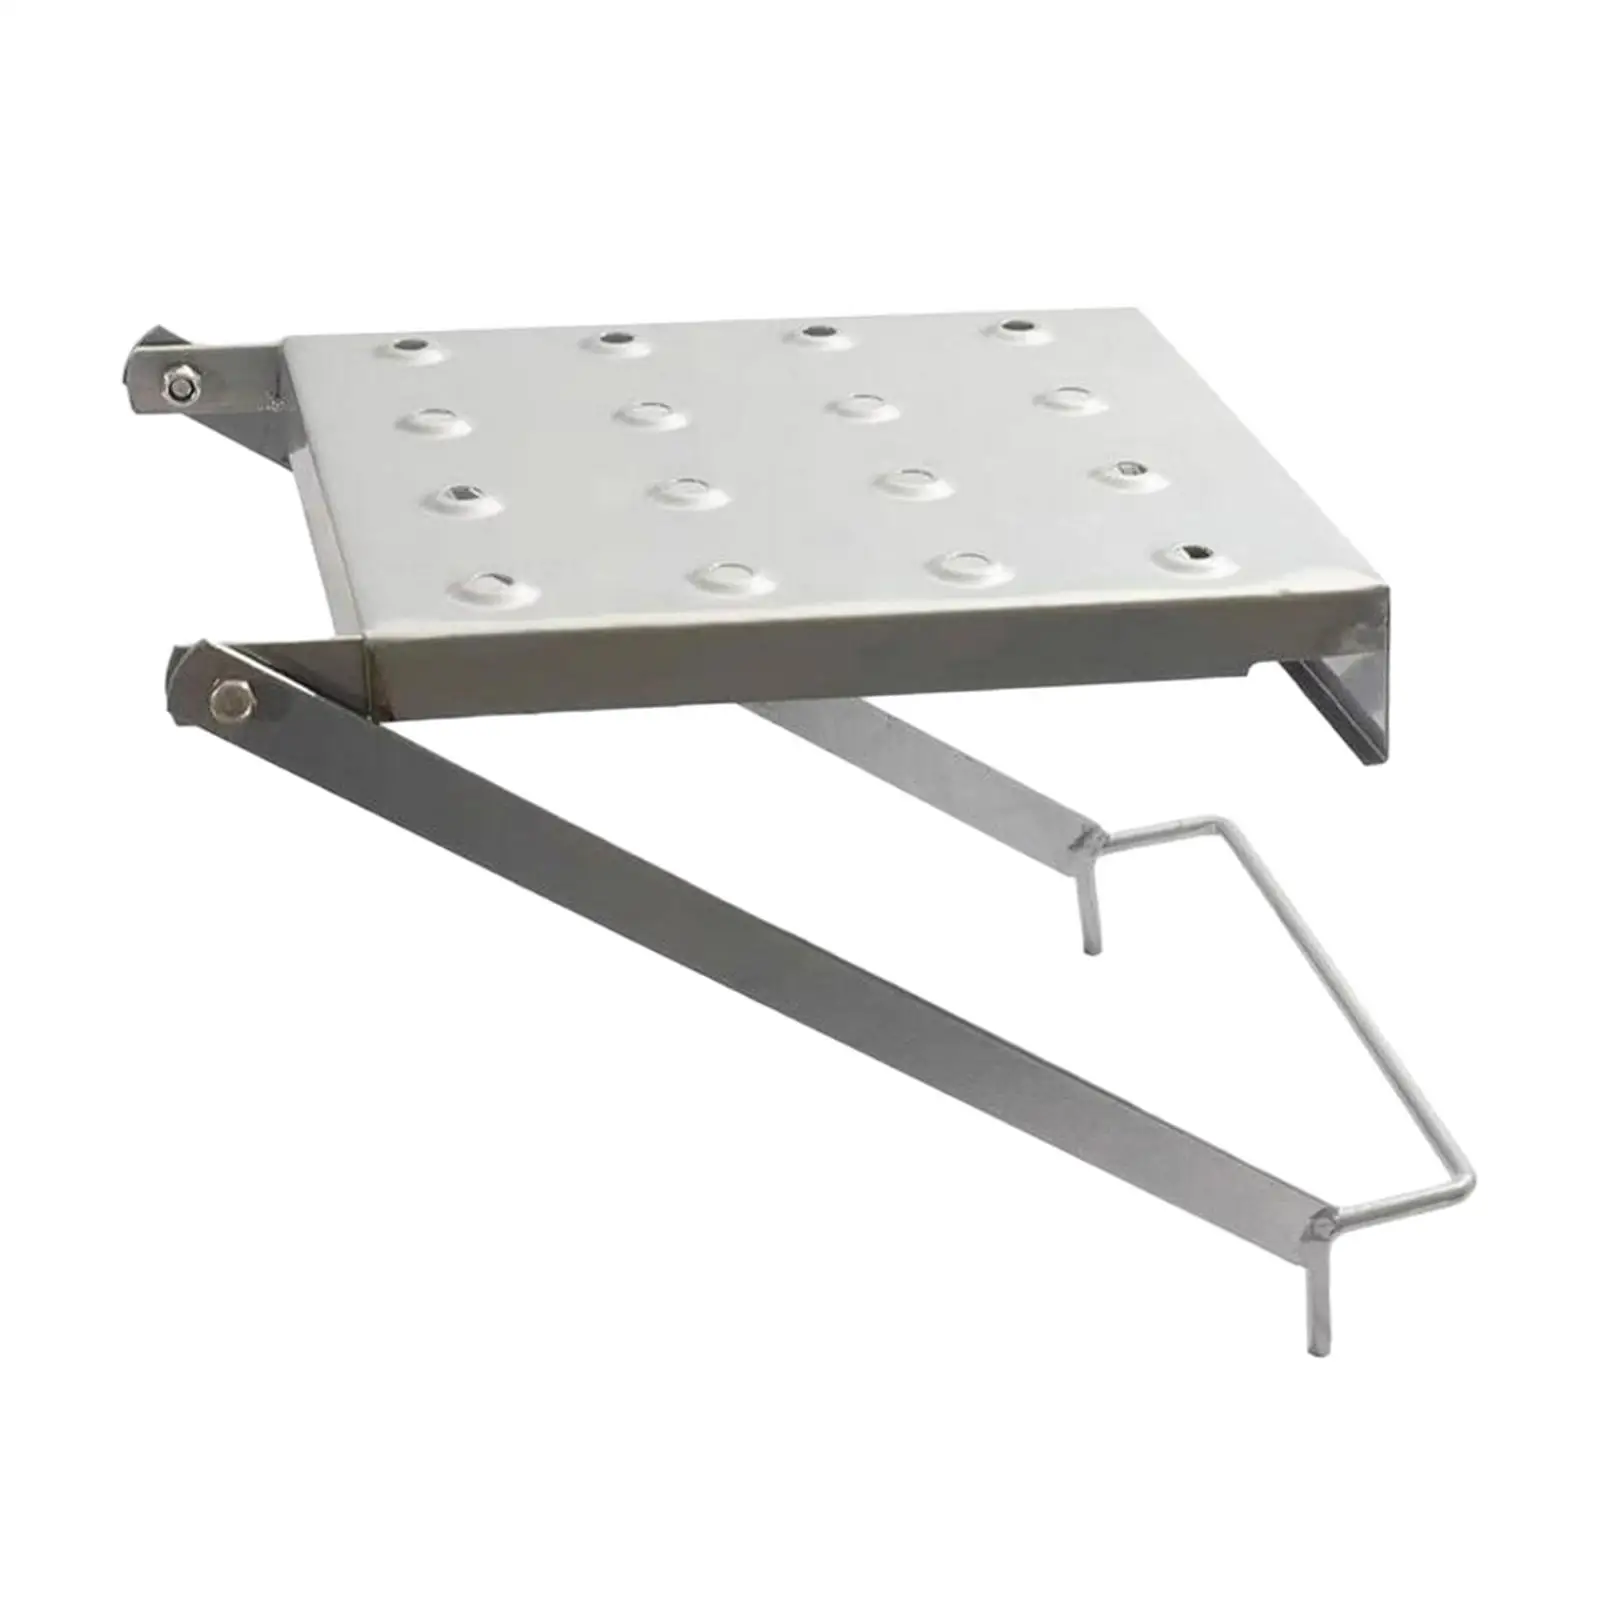 Ladder Work Platform Stable Work Ladder Tray Multifunction for Household Kitchen Pantry